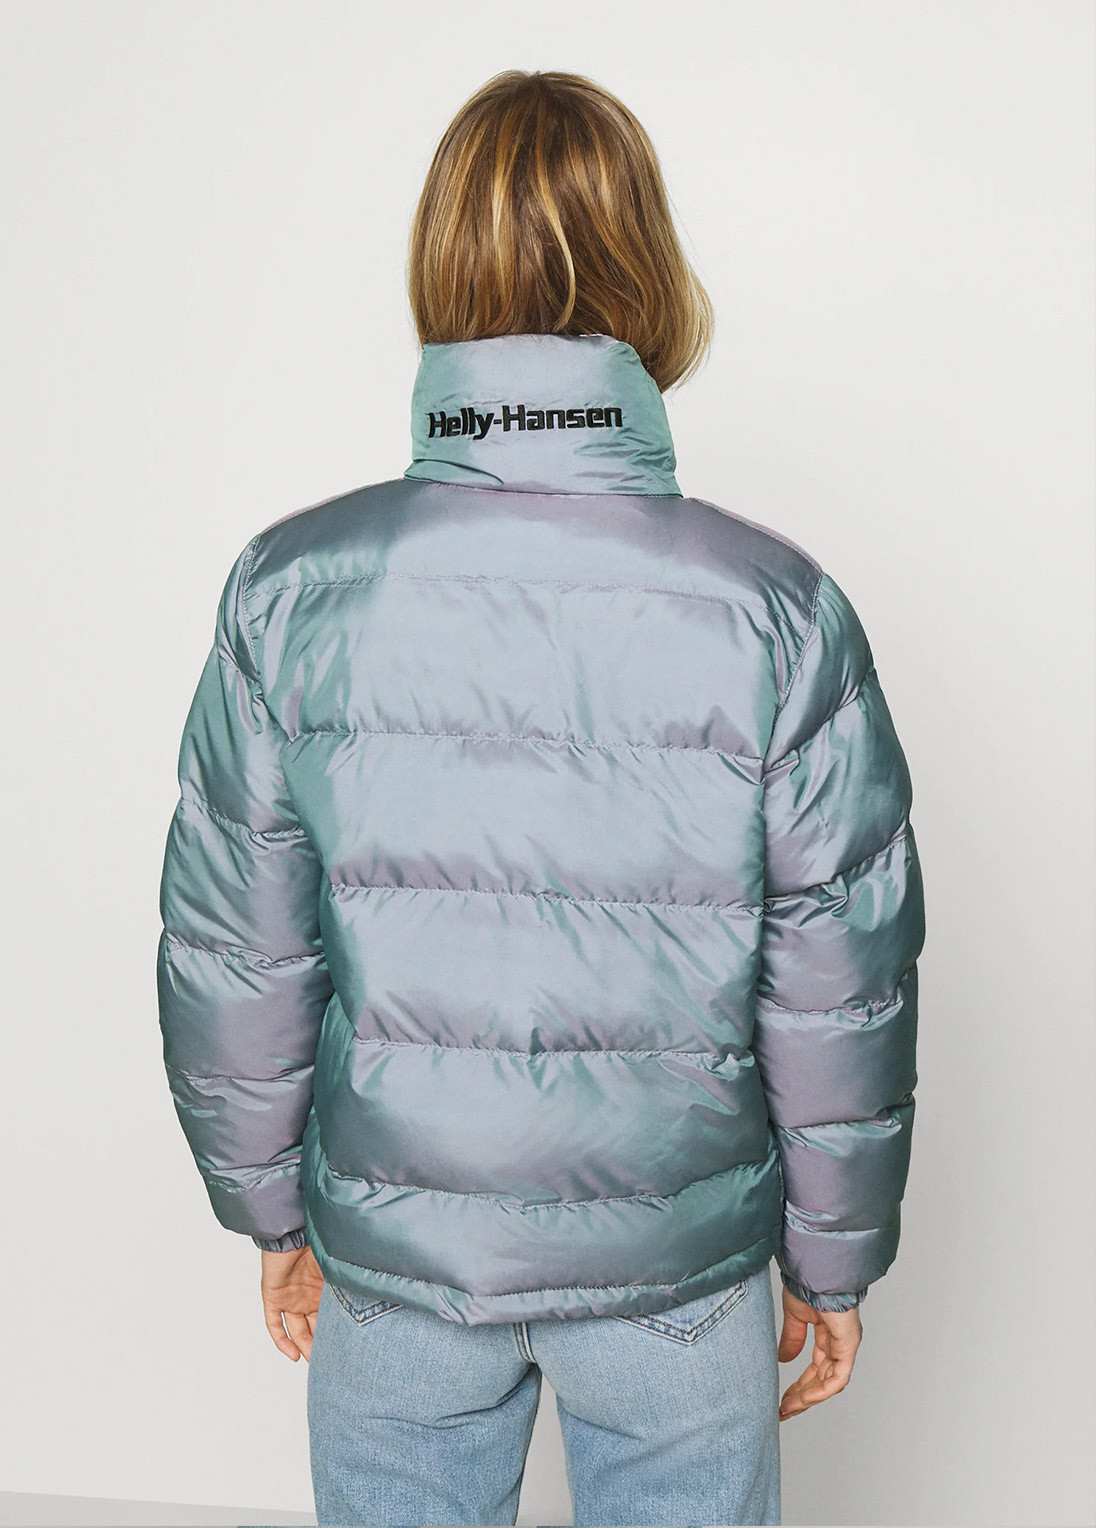 Helly Hansen reversible puffer jacket in blue